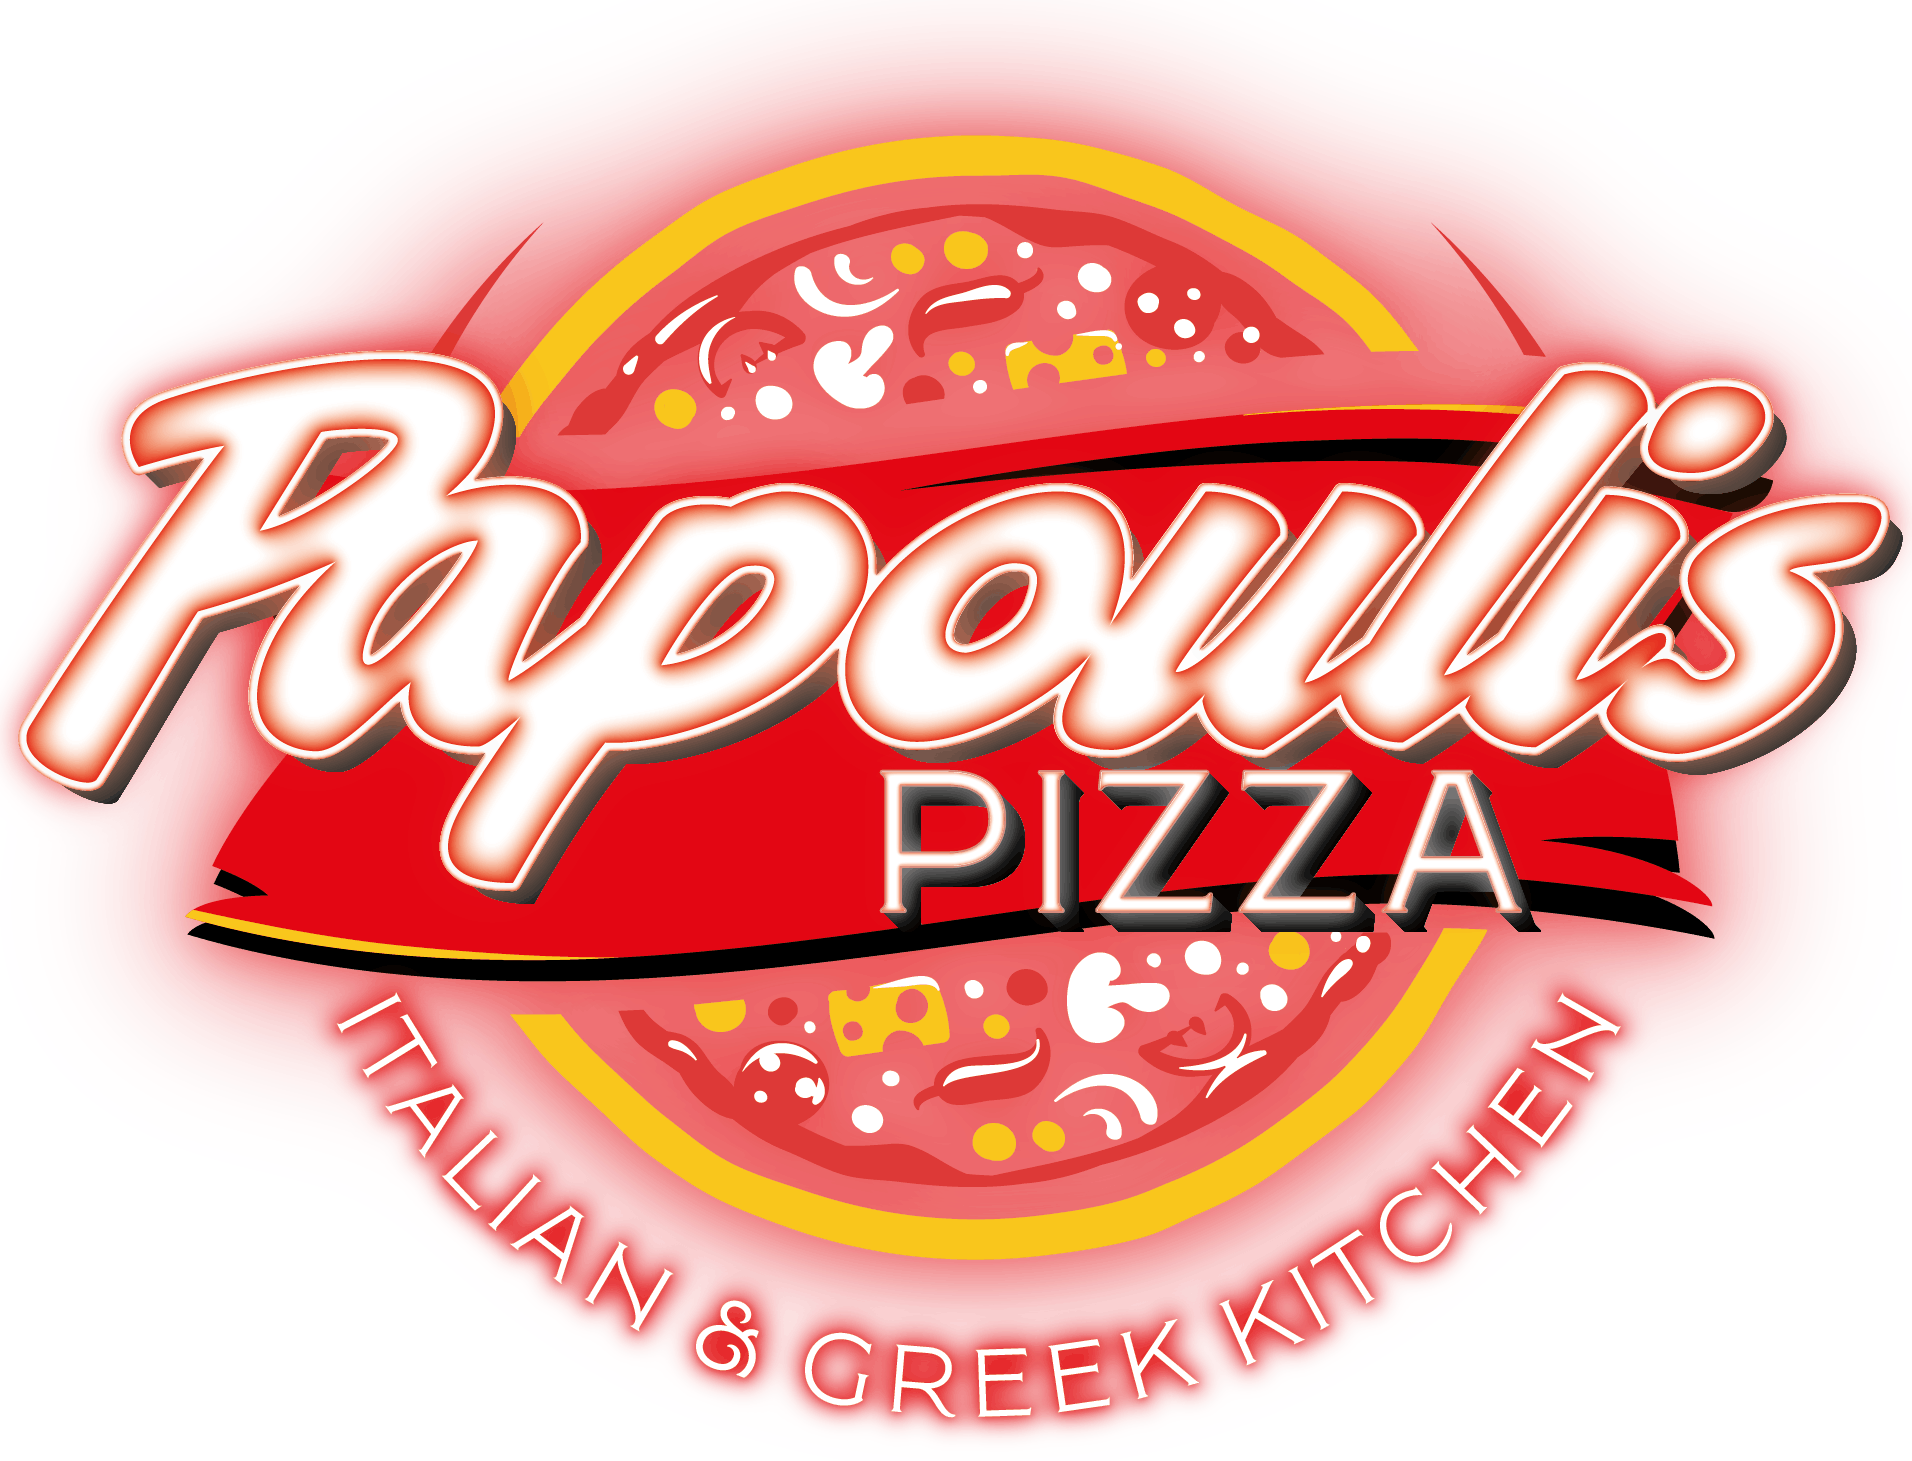 Papouli's Brick Oven Pizza & Restaurant Logo